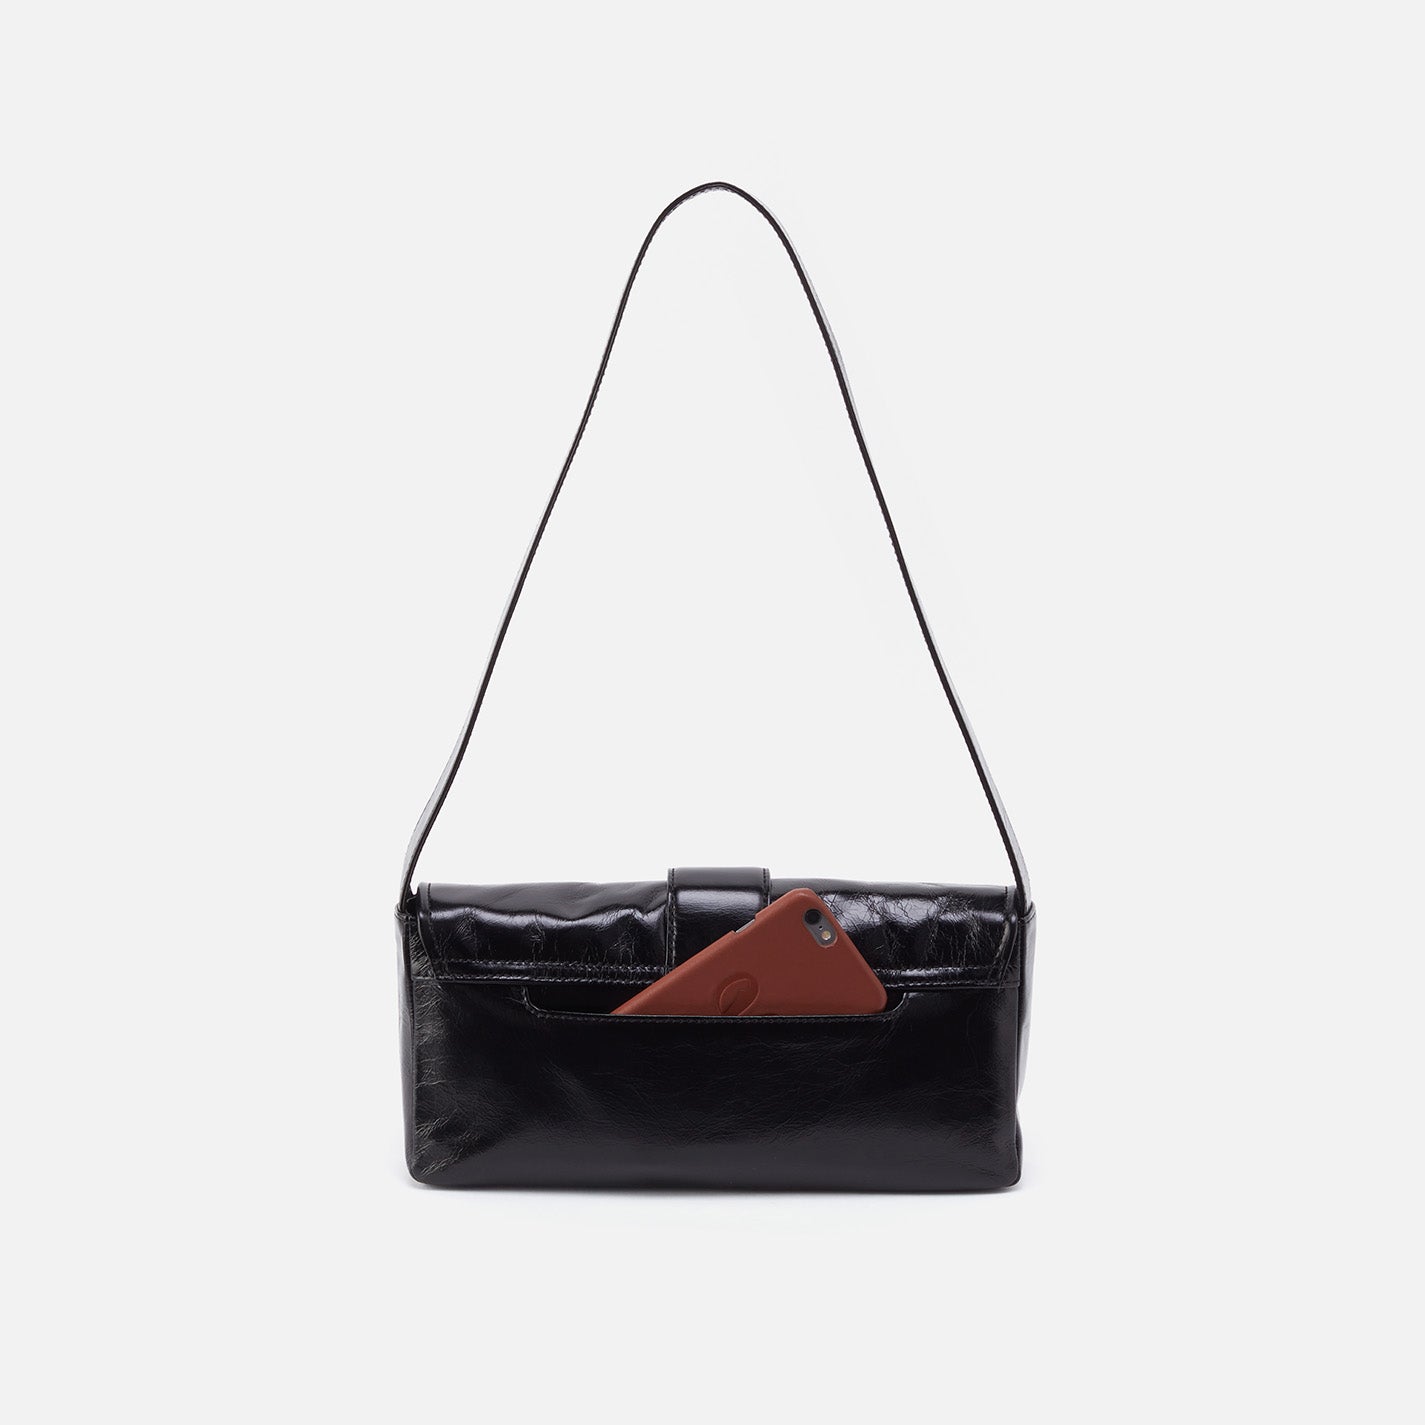 Guard Black Unisex Leather Clutch Bag, Handbag Prices